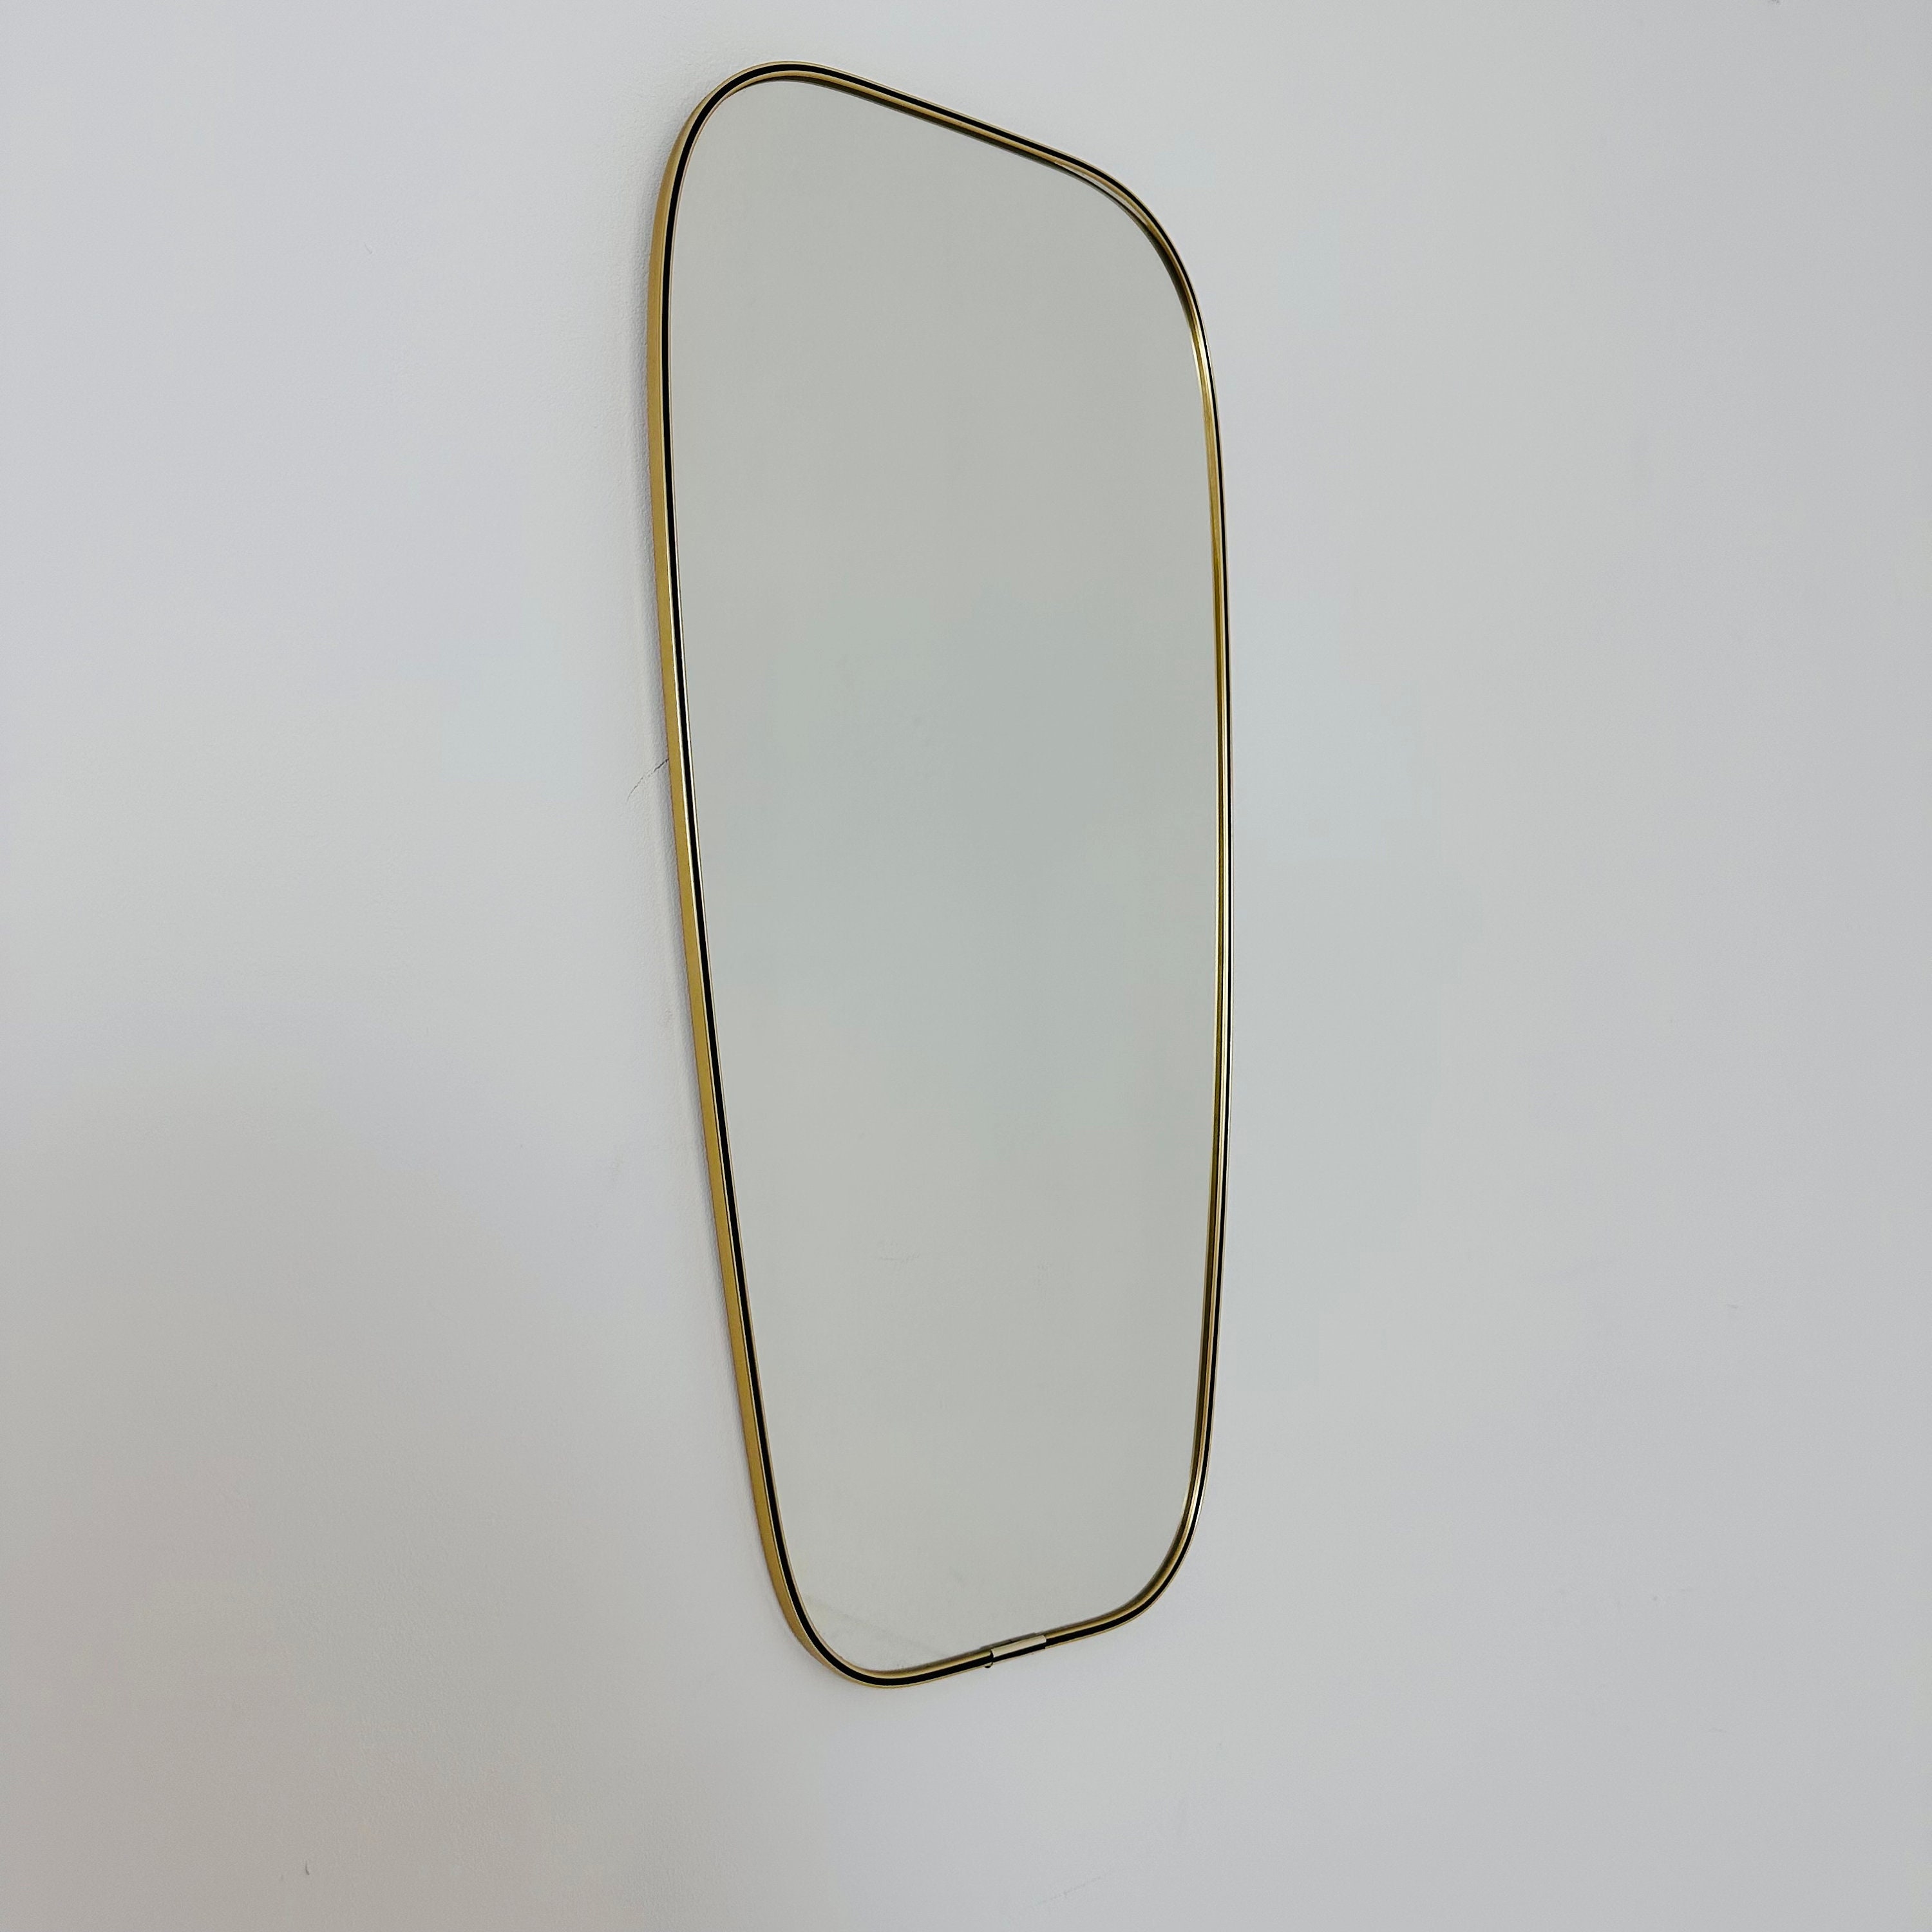 Mid Century Asymmetric German Brass Original Kidney Wall Mirror From the  60s Model Number 986 